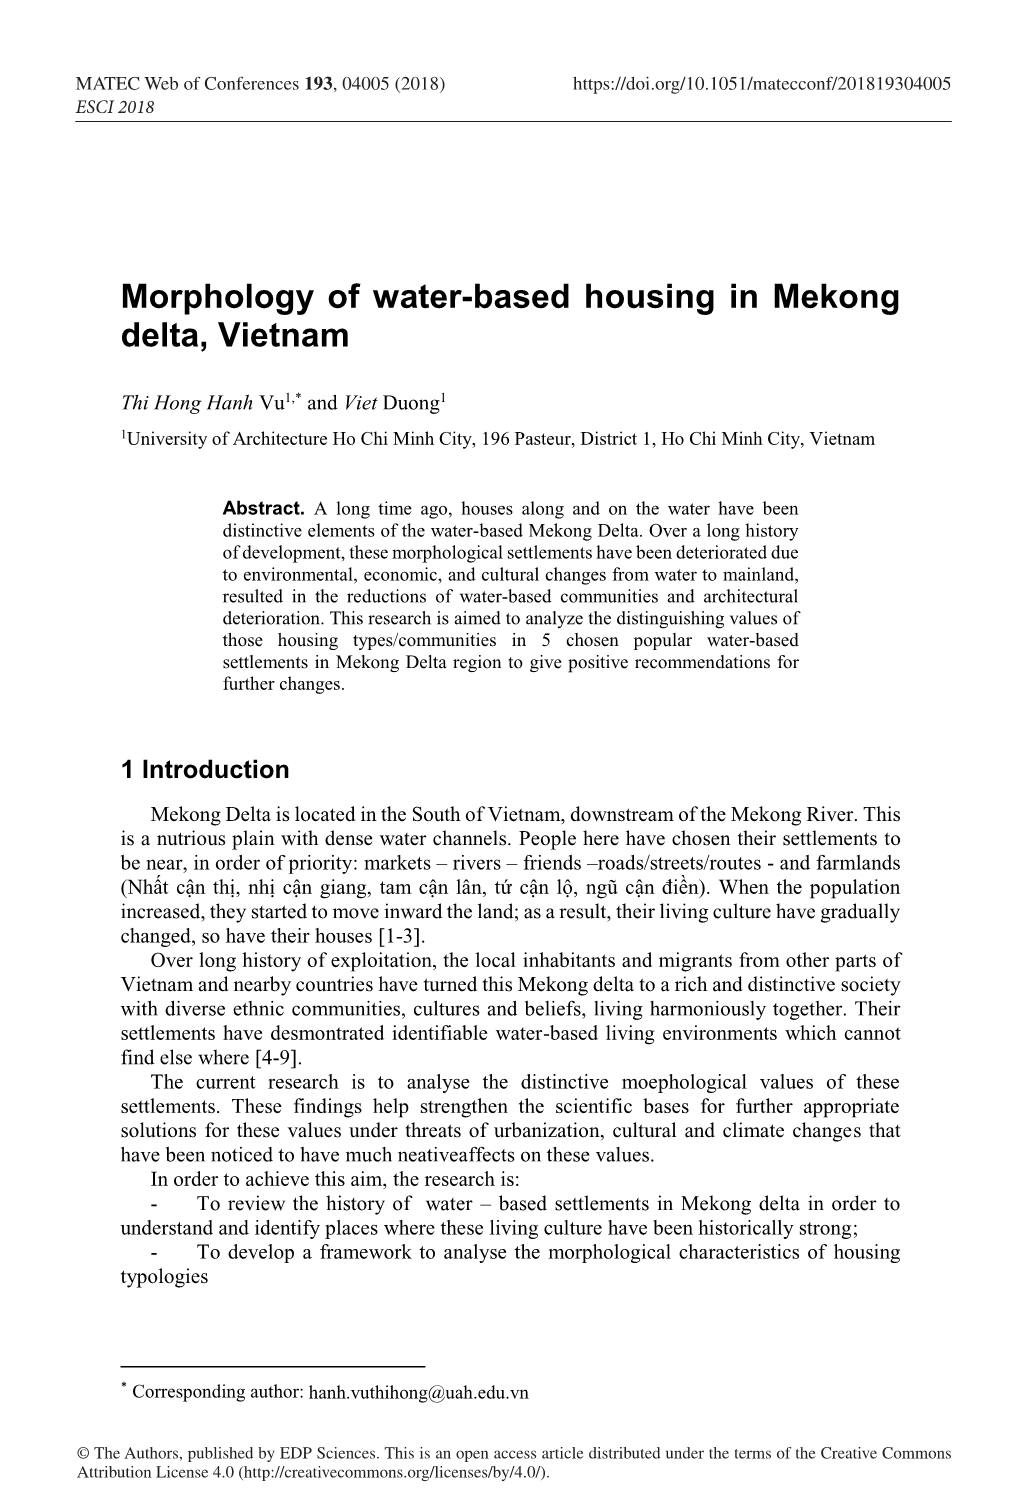 Morphology of Water-Based Housing in Mekong Delta, Vietnam